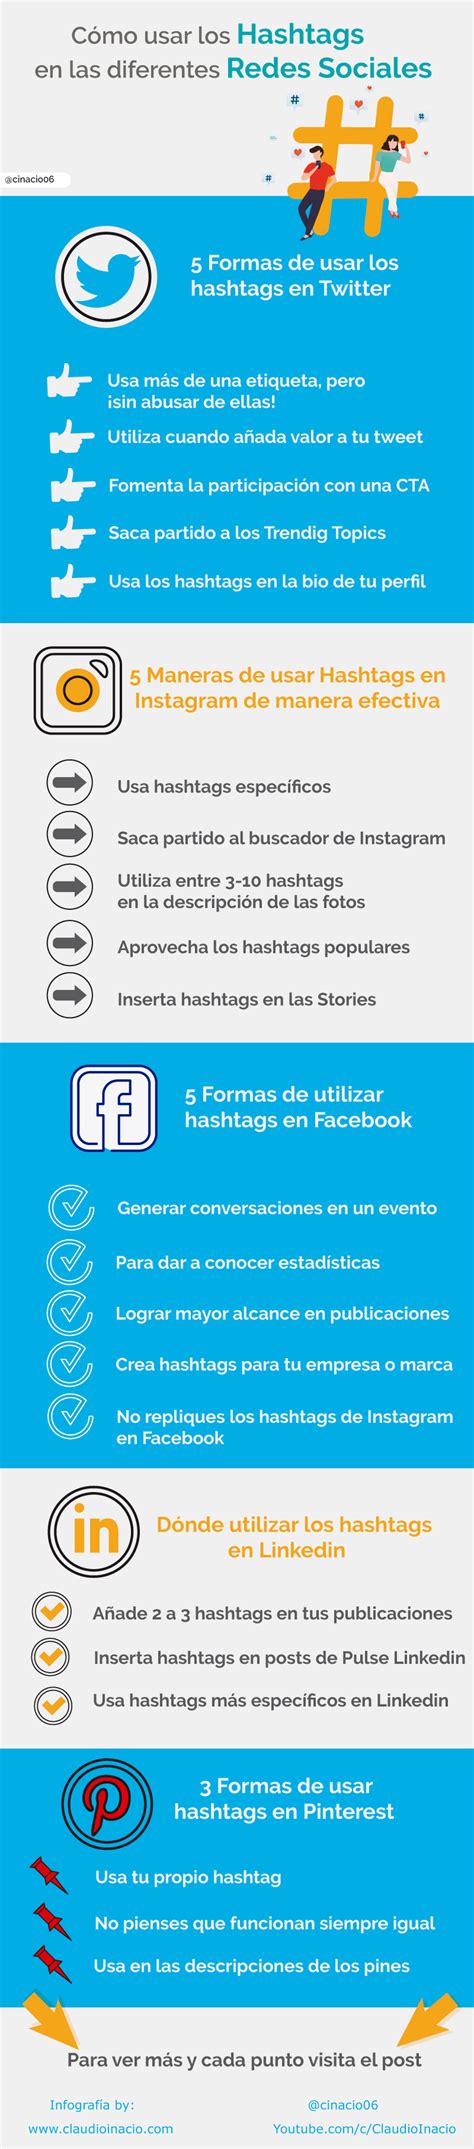 Consejos Para Usar Hashtags En Redes Sociales Infografia Infographic Socialmedia Tics Y